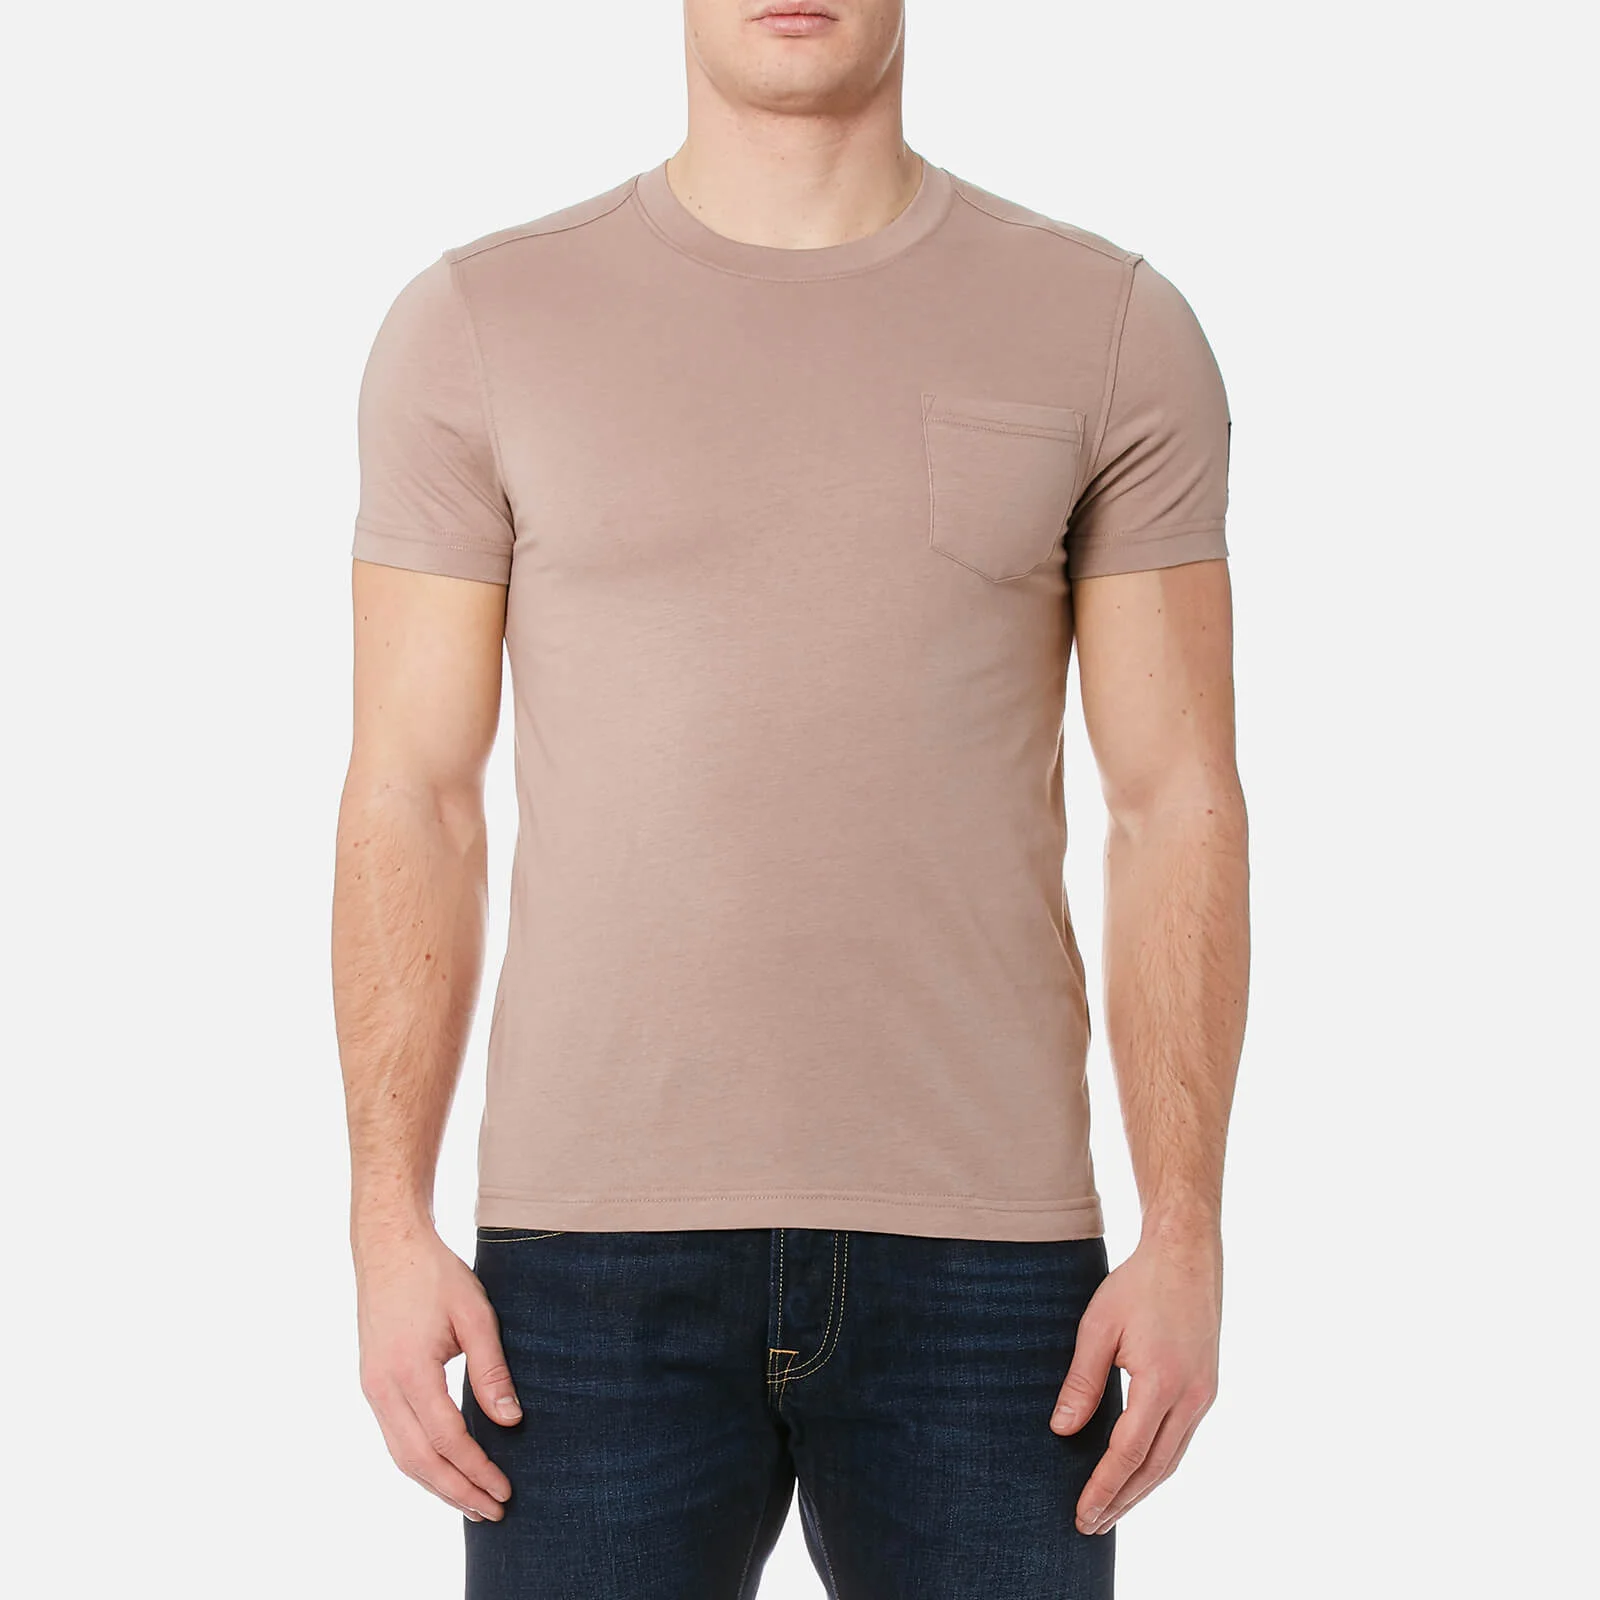 Belstaff Men's New Thom T-Shirt - Ash Rose Image 1